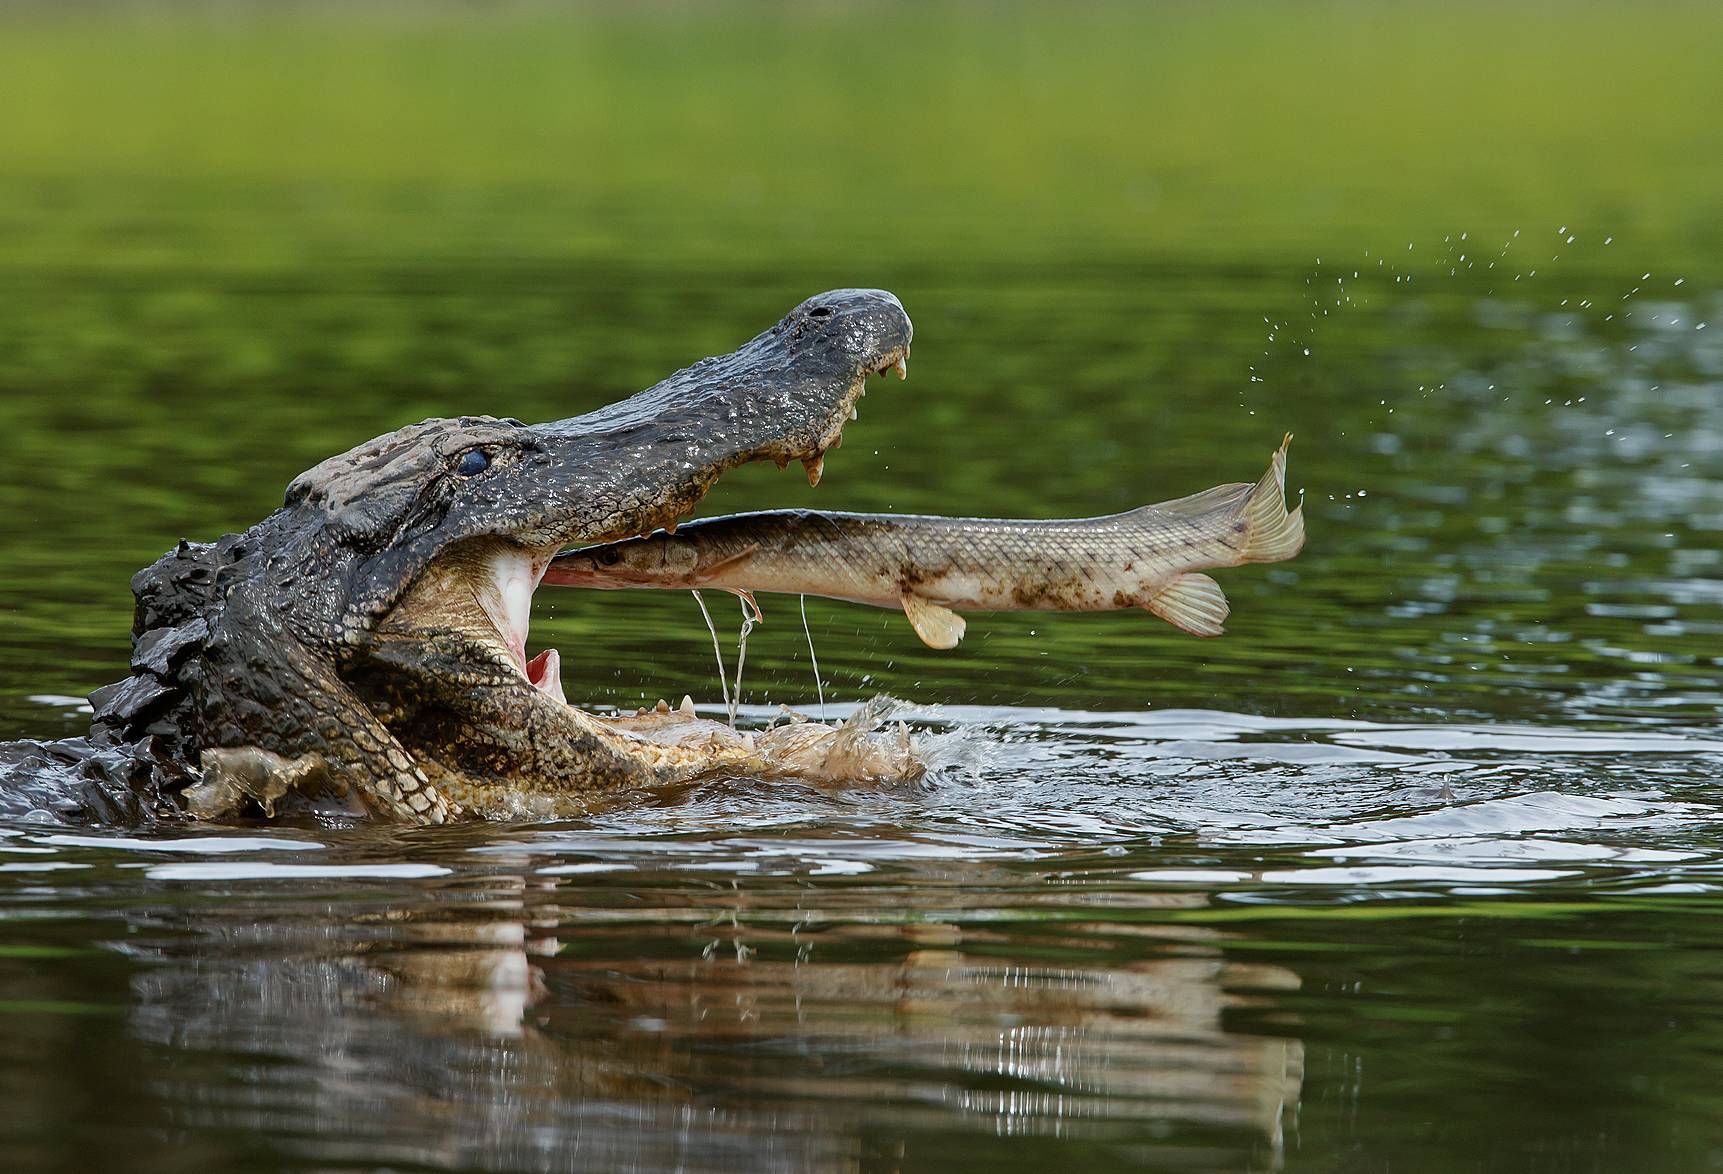 Alligator gar jumping into alligators mouth.